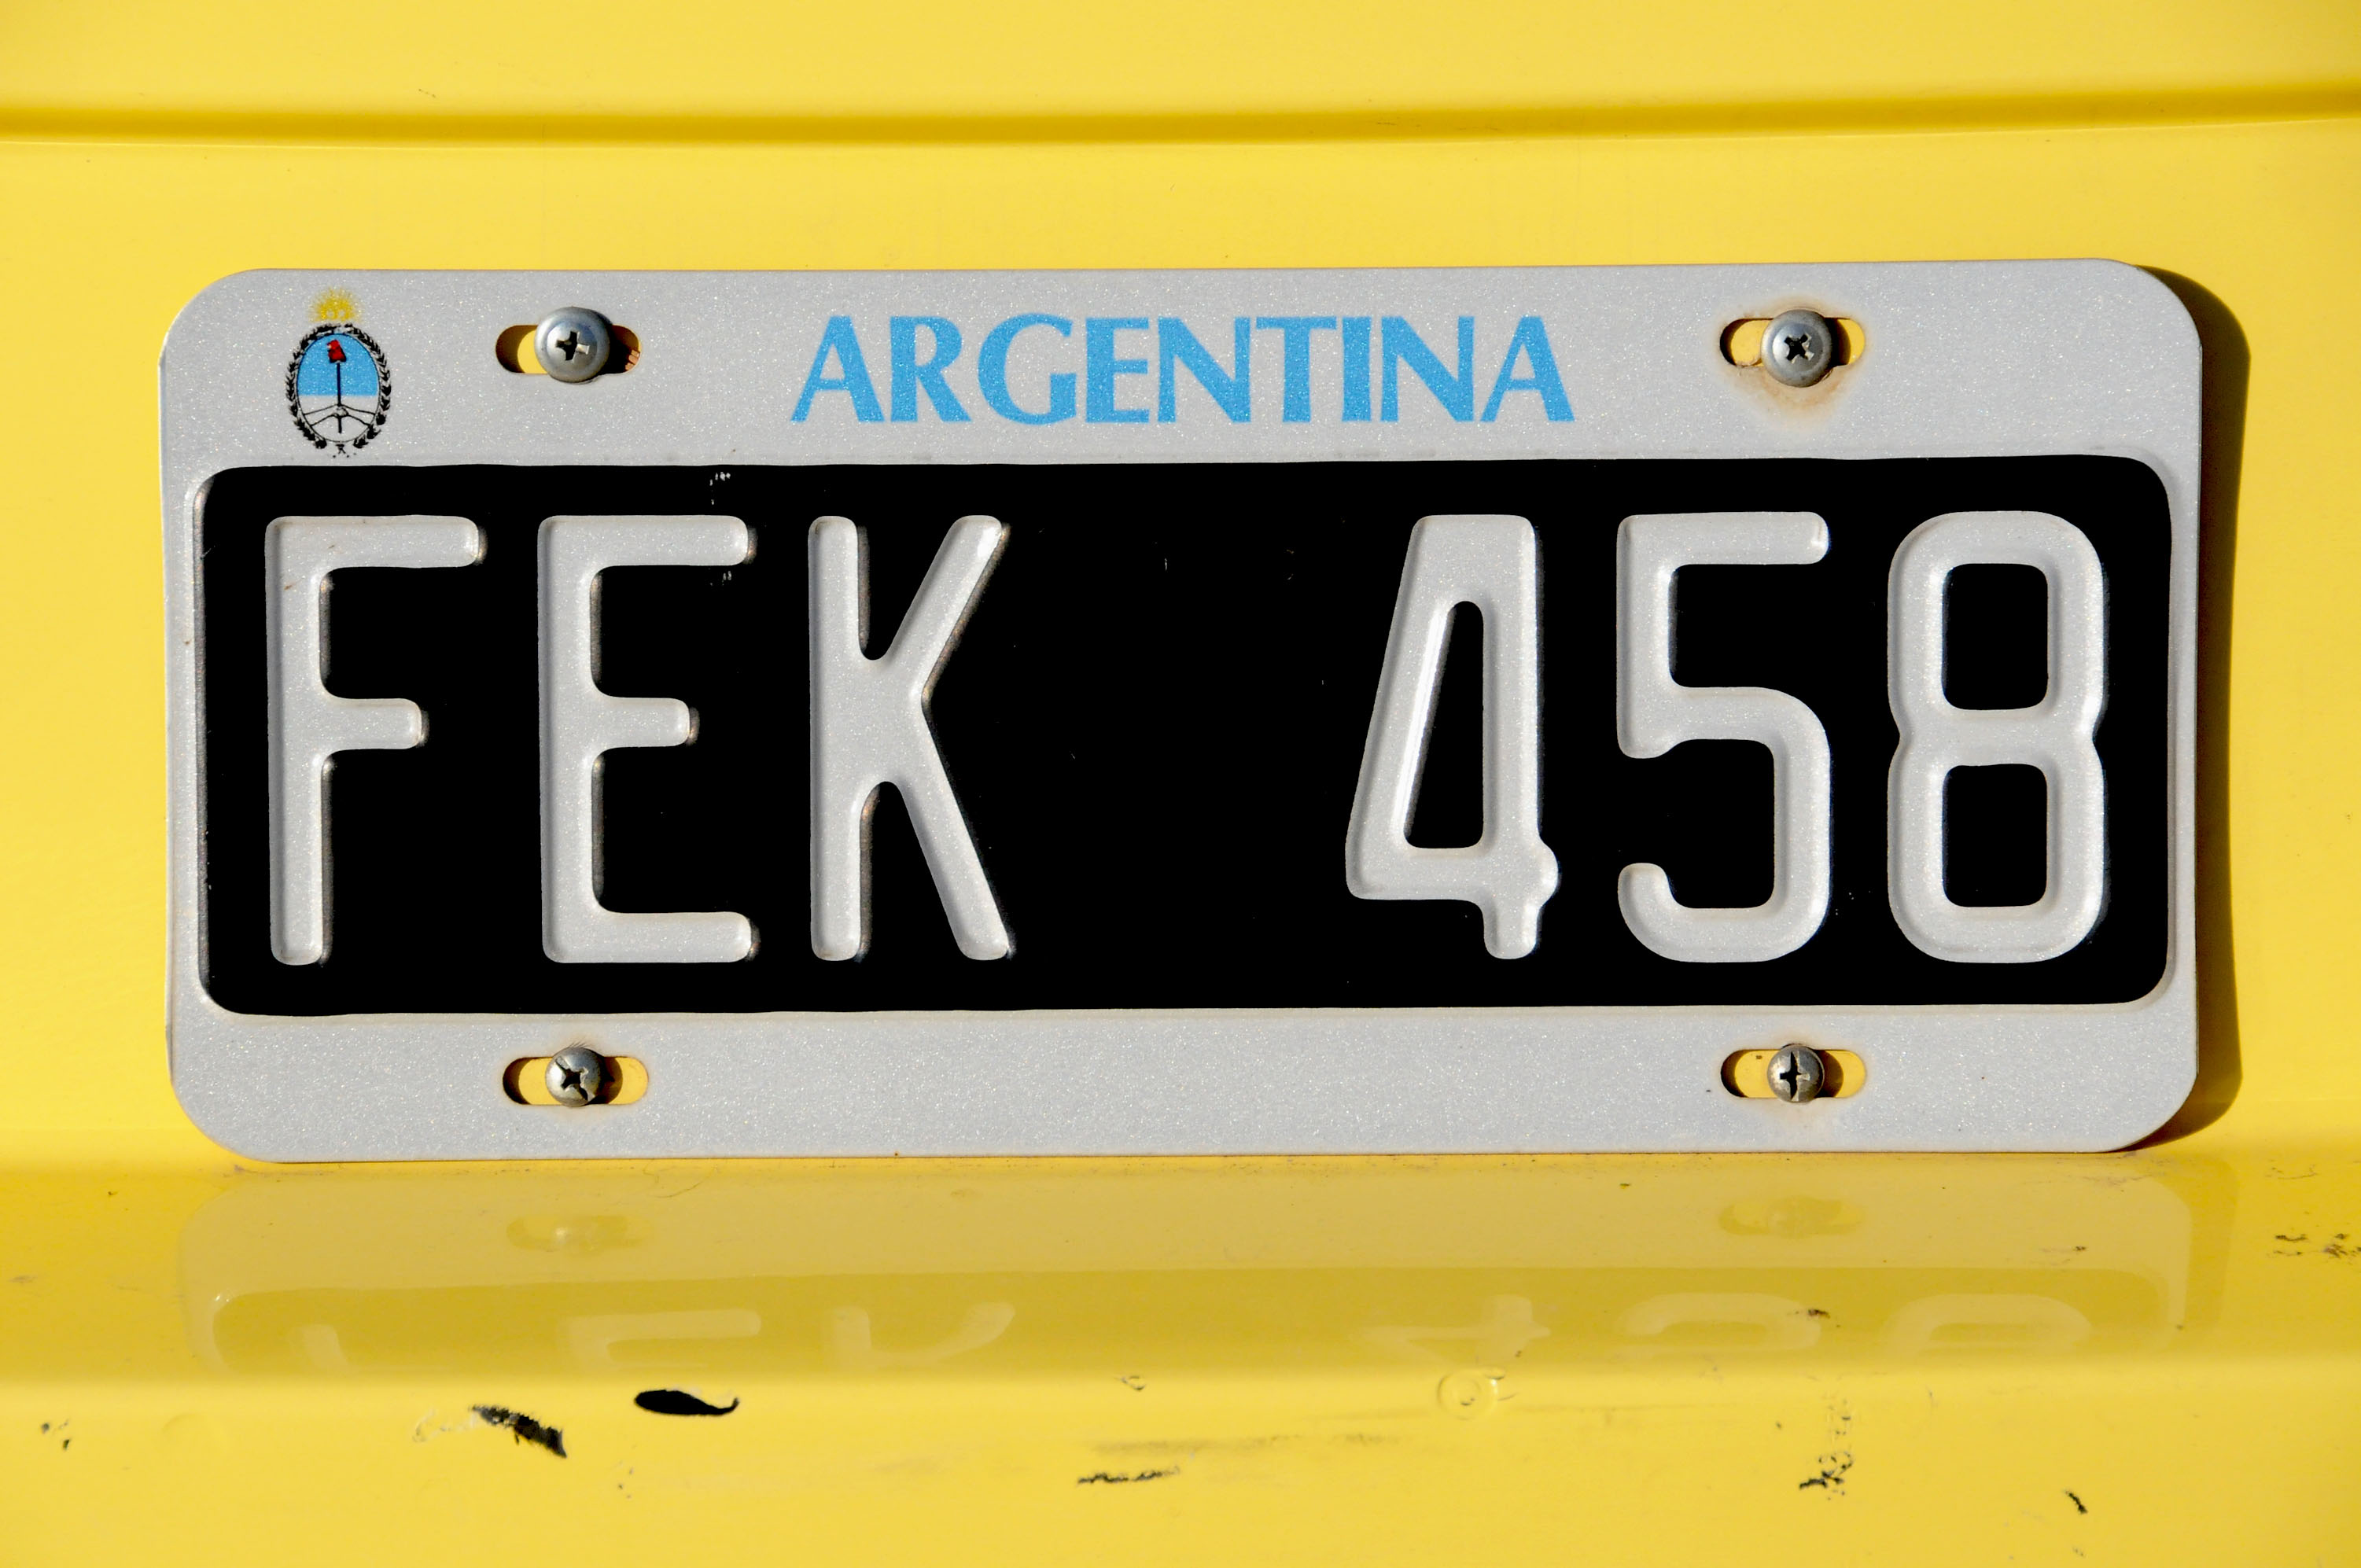 ANJCI ALL OVER | Argentina